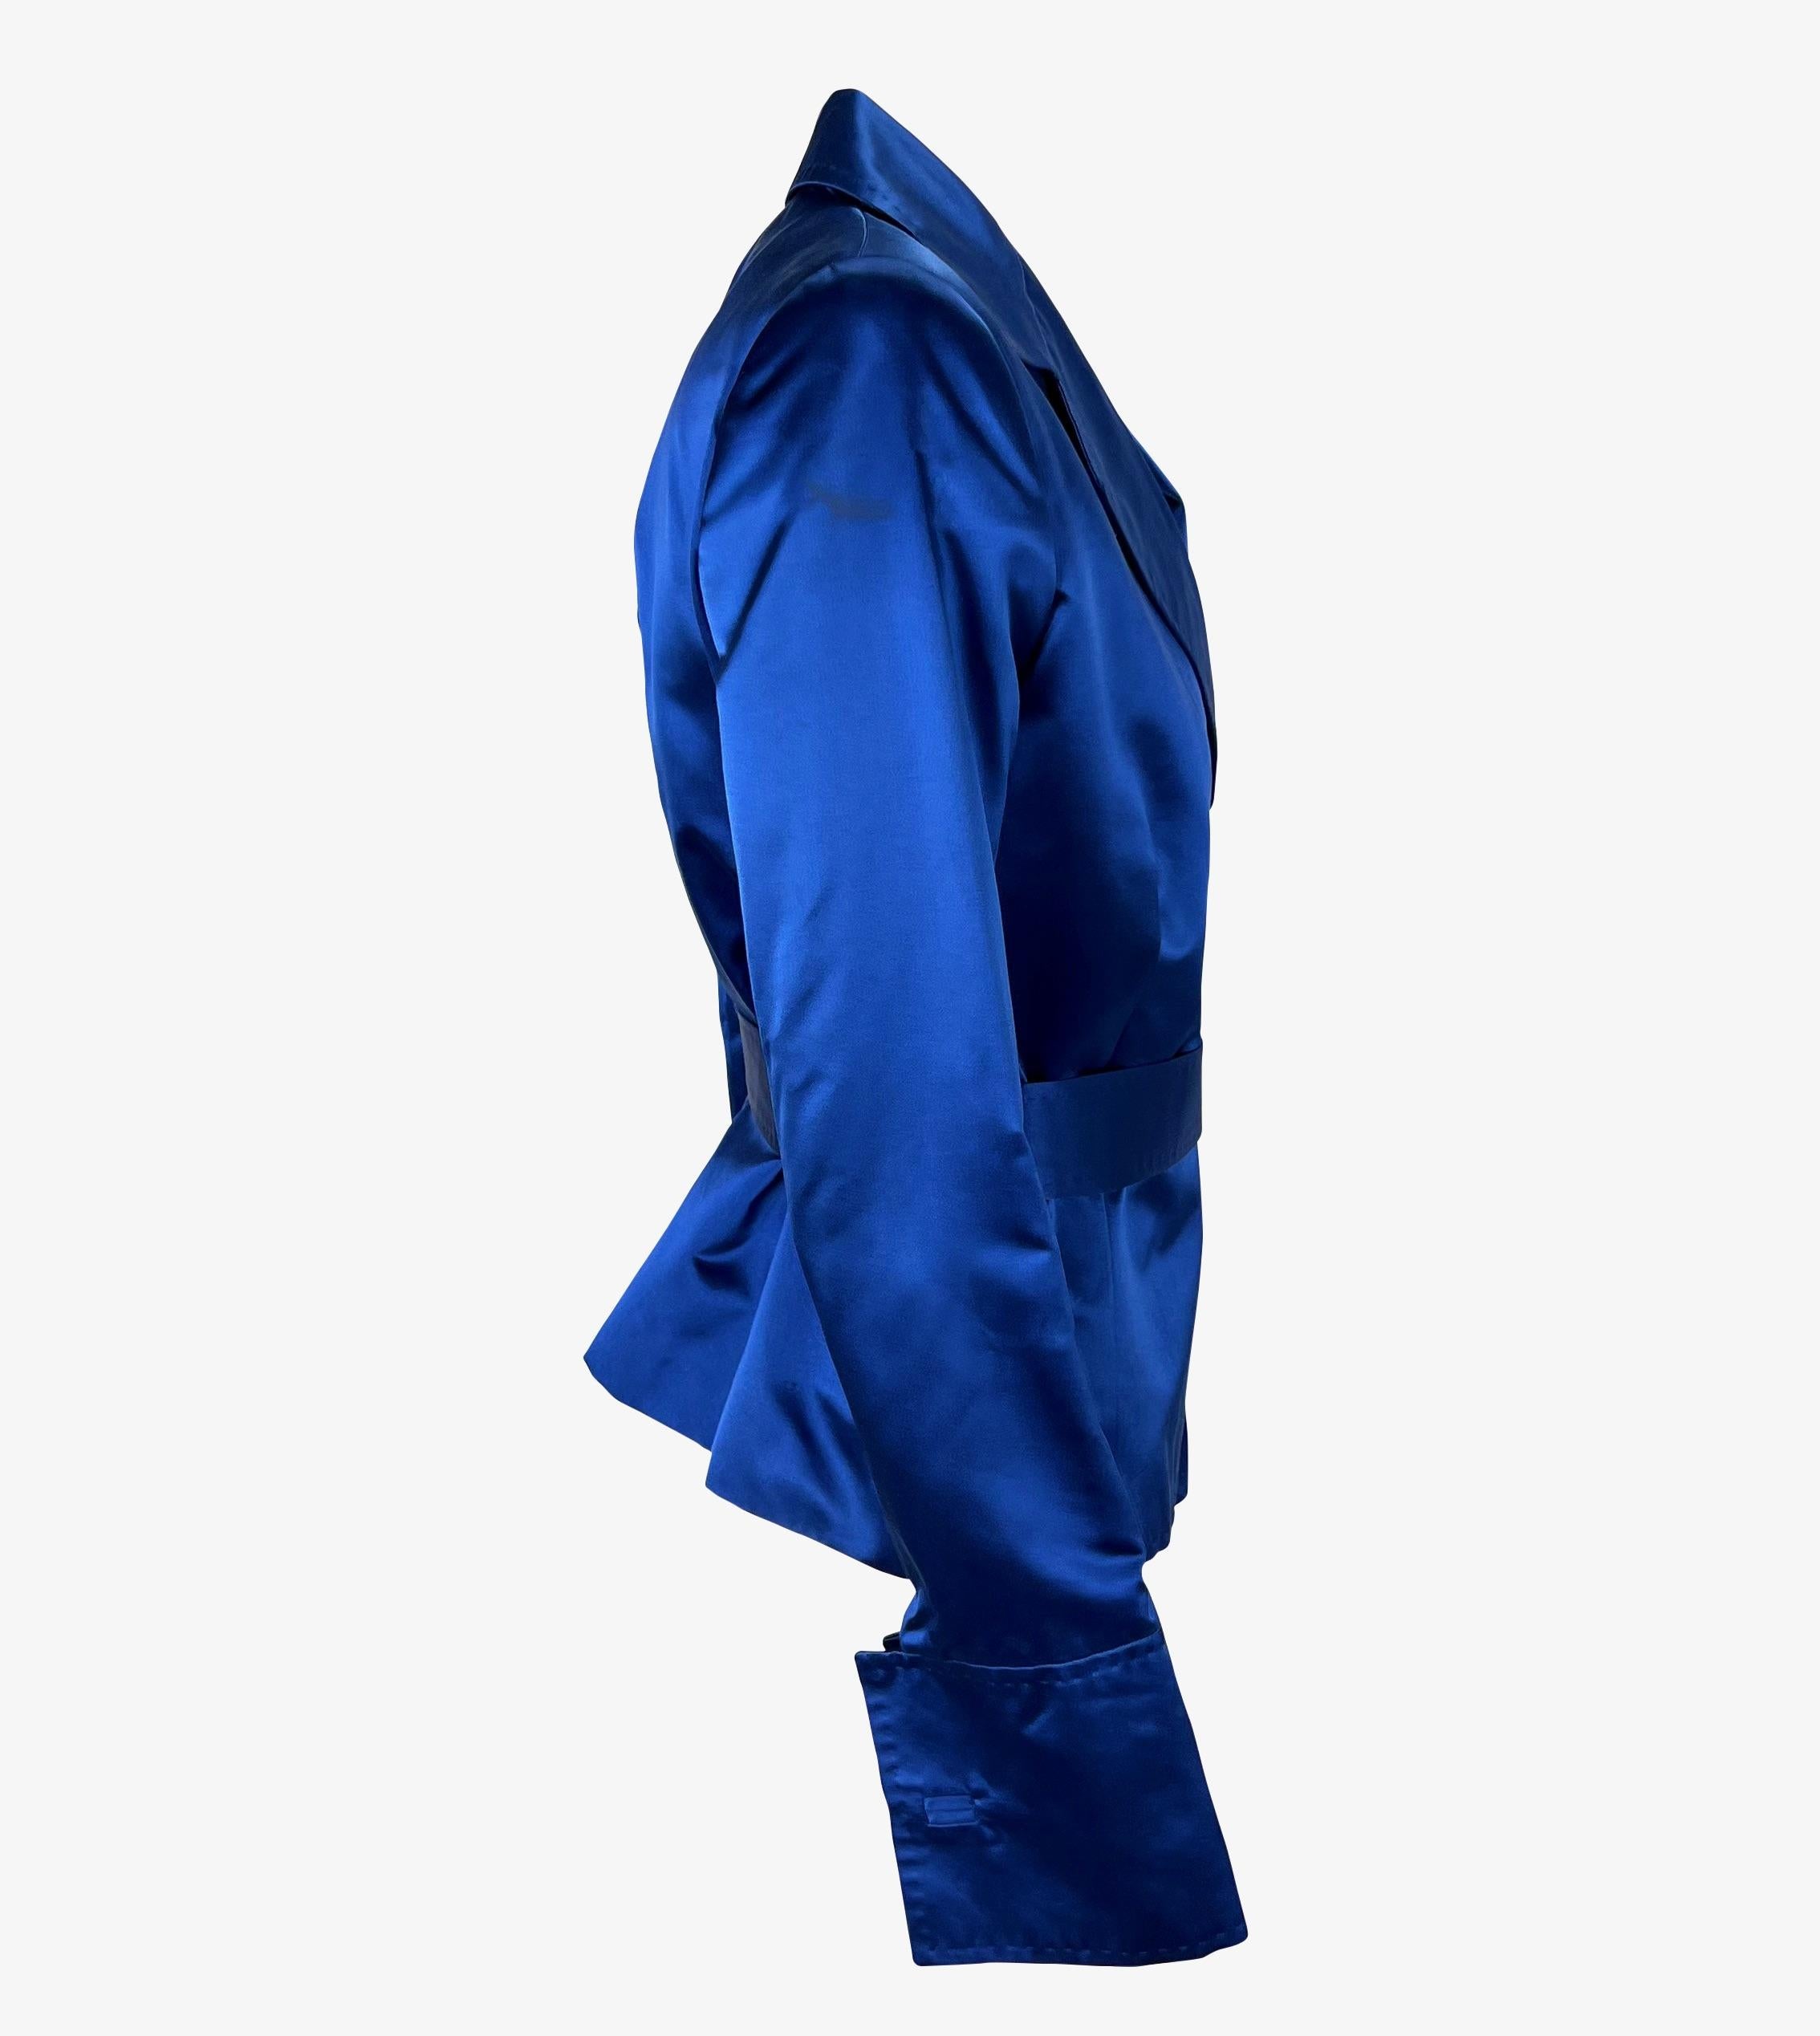 S/S 2001 Dolce & Gabbana Sex & The City Runway Blue Silk Satin Blazer Jacket For Sale 2